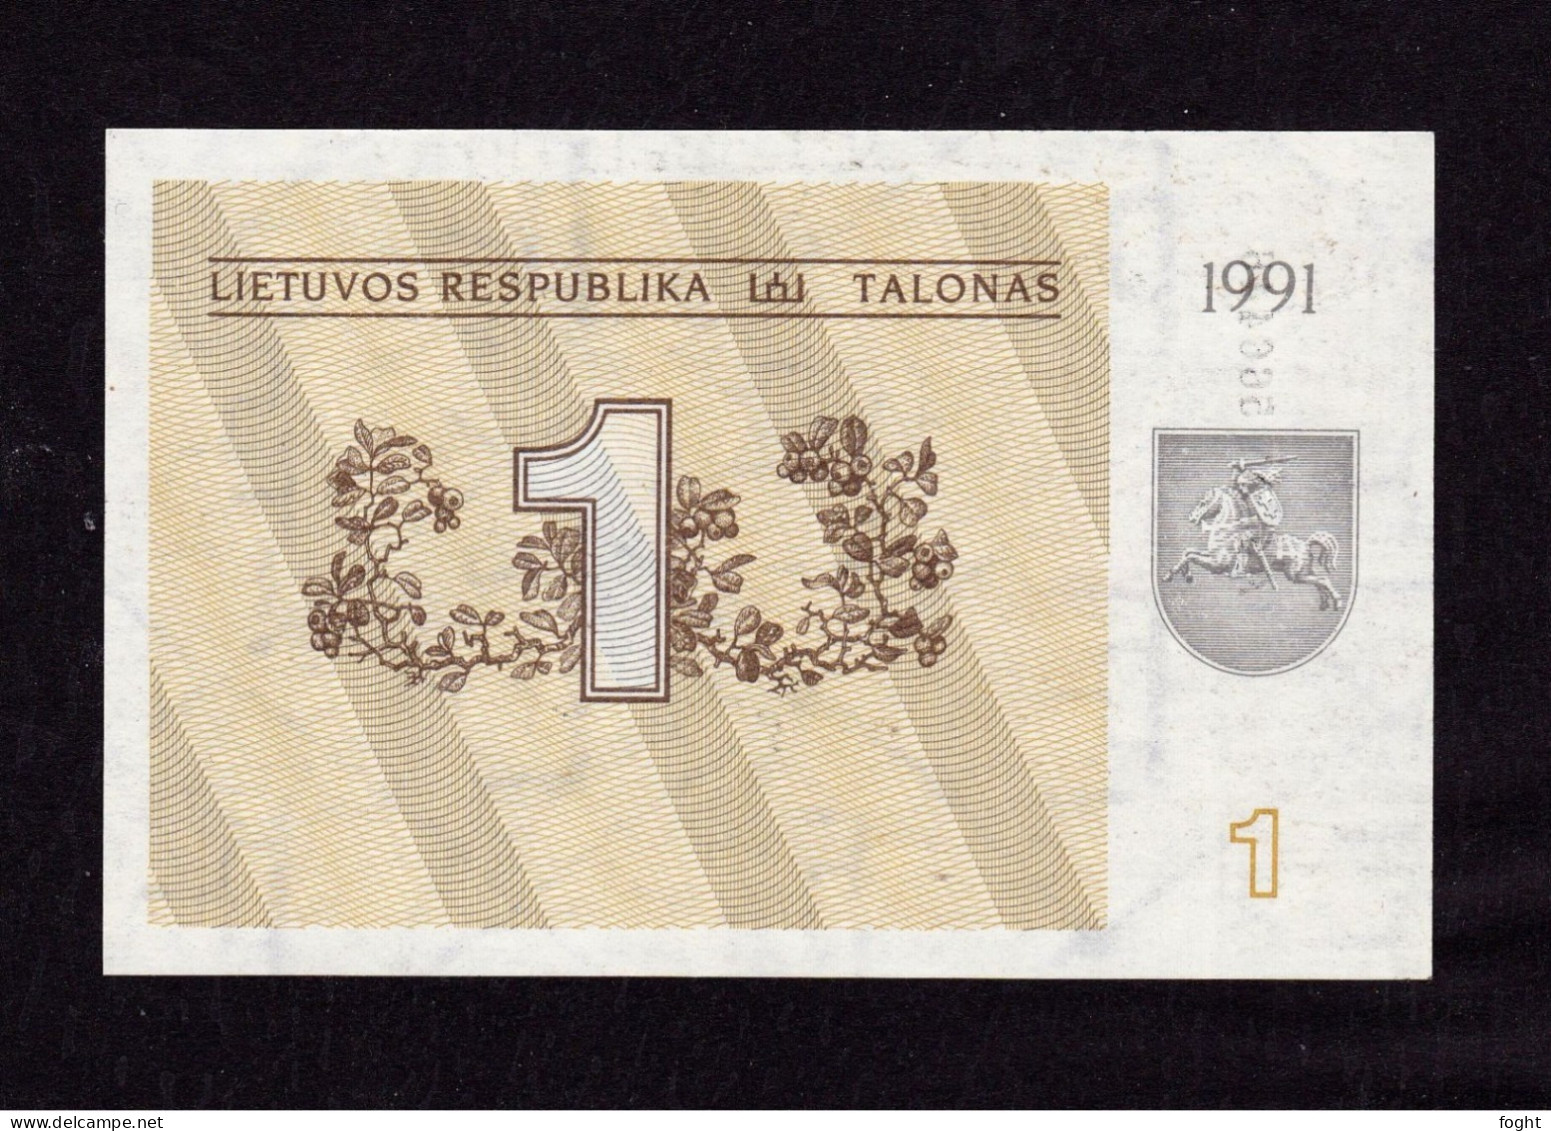 1991 AS Lithuania Banknote 1 (Talonas),P#32A,UNC - Lituanie